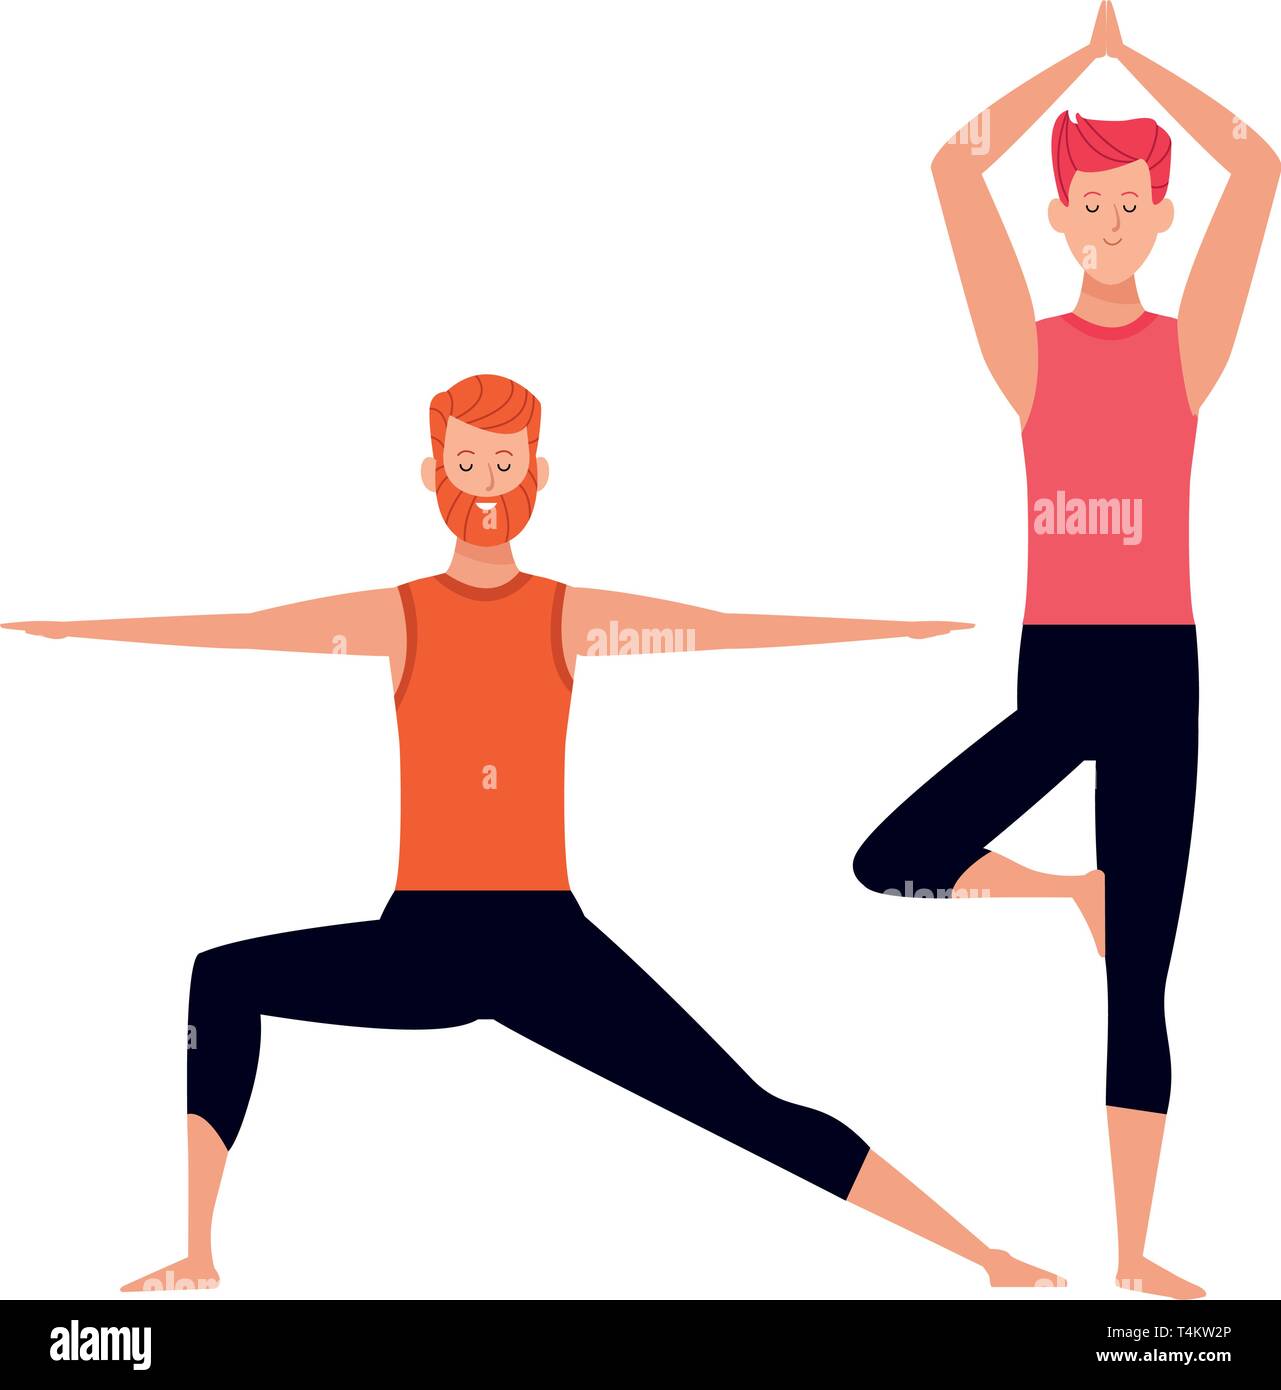 yoga poses for men